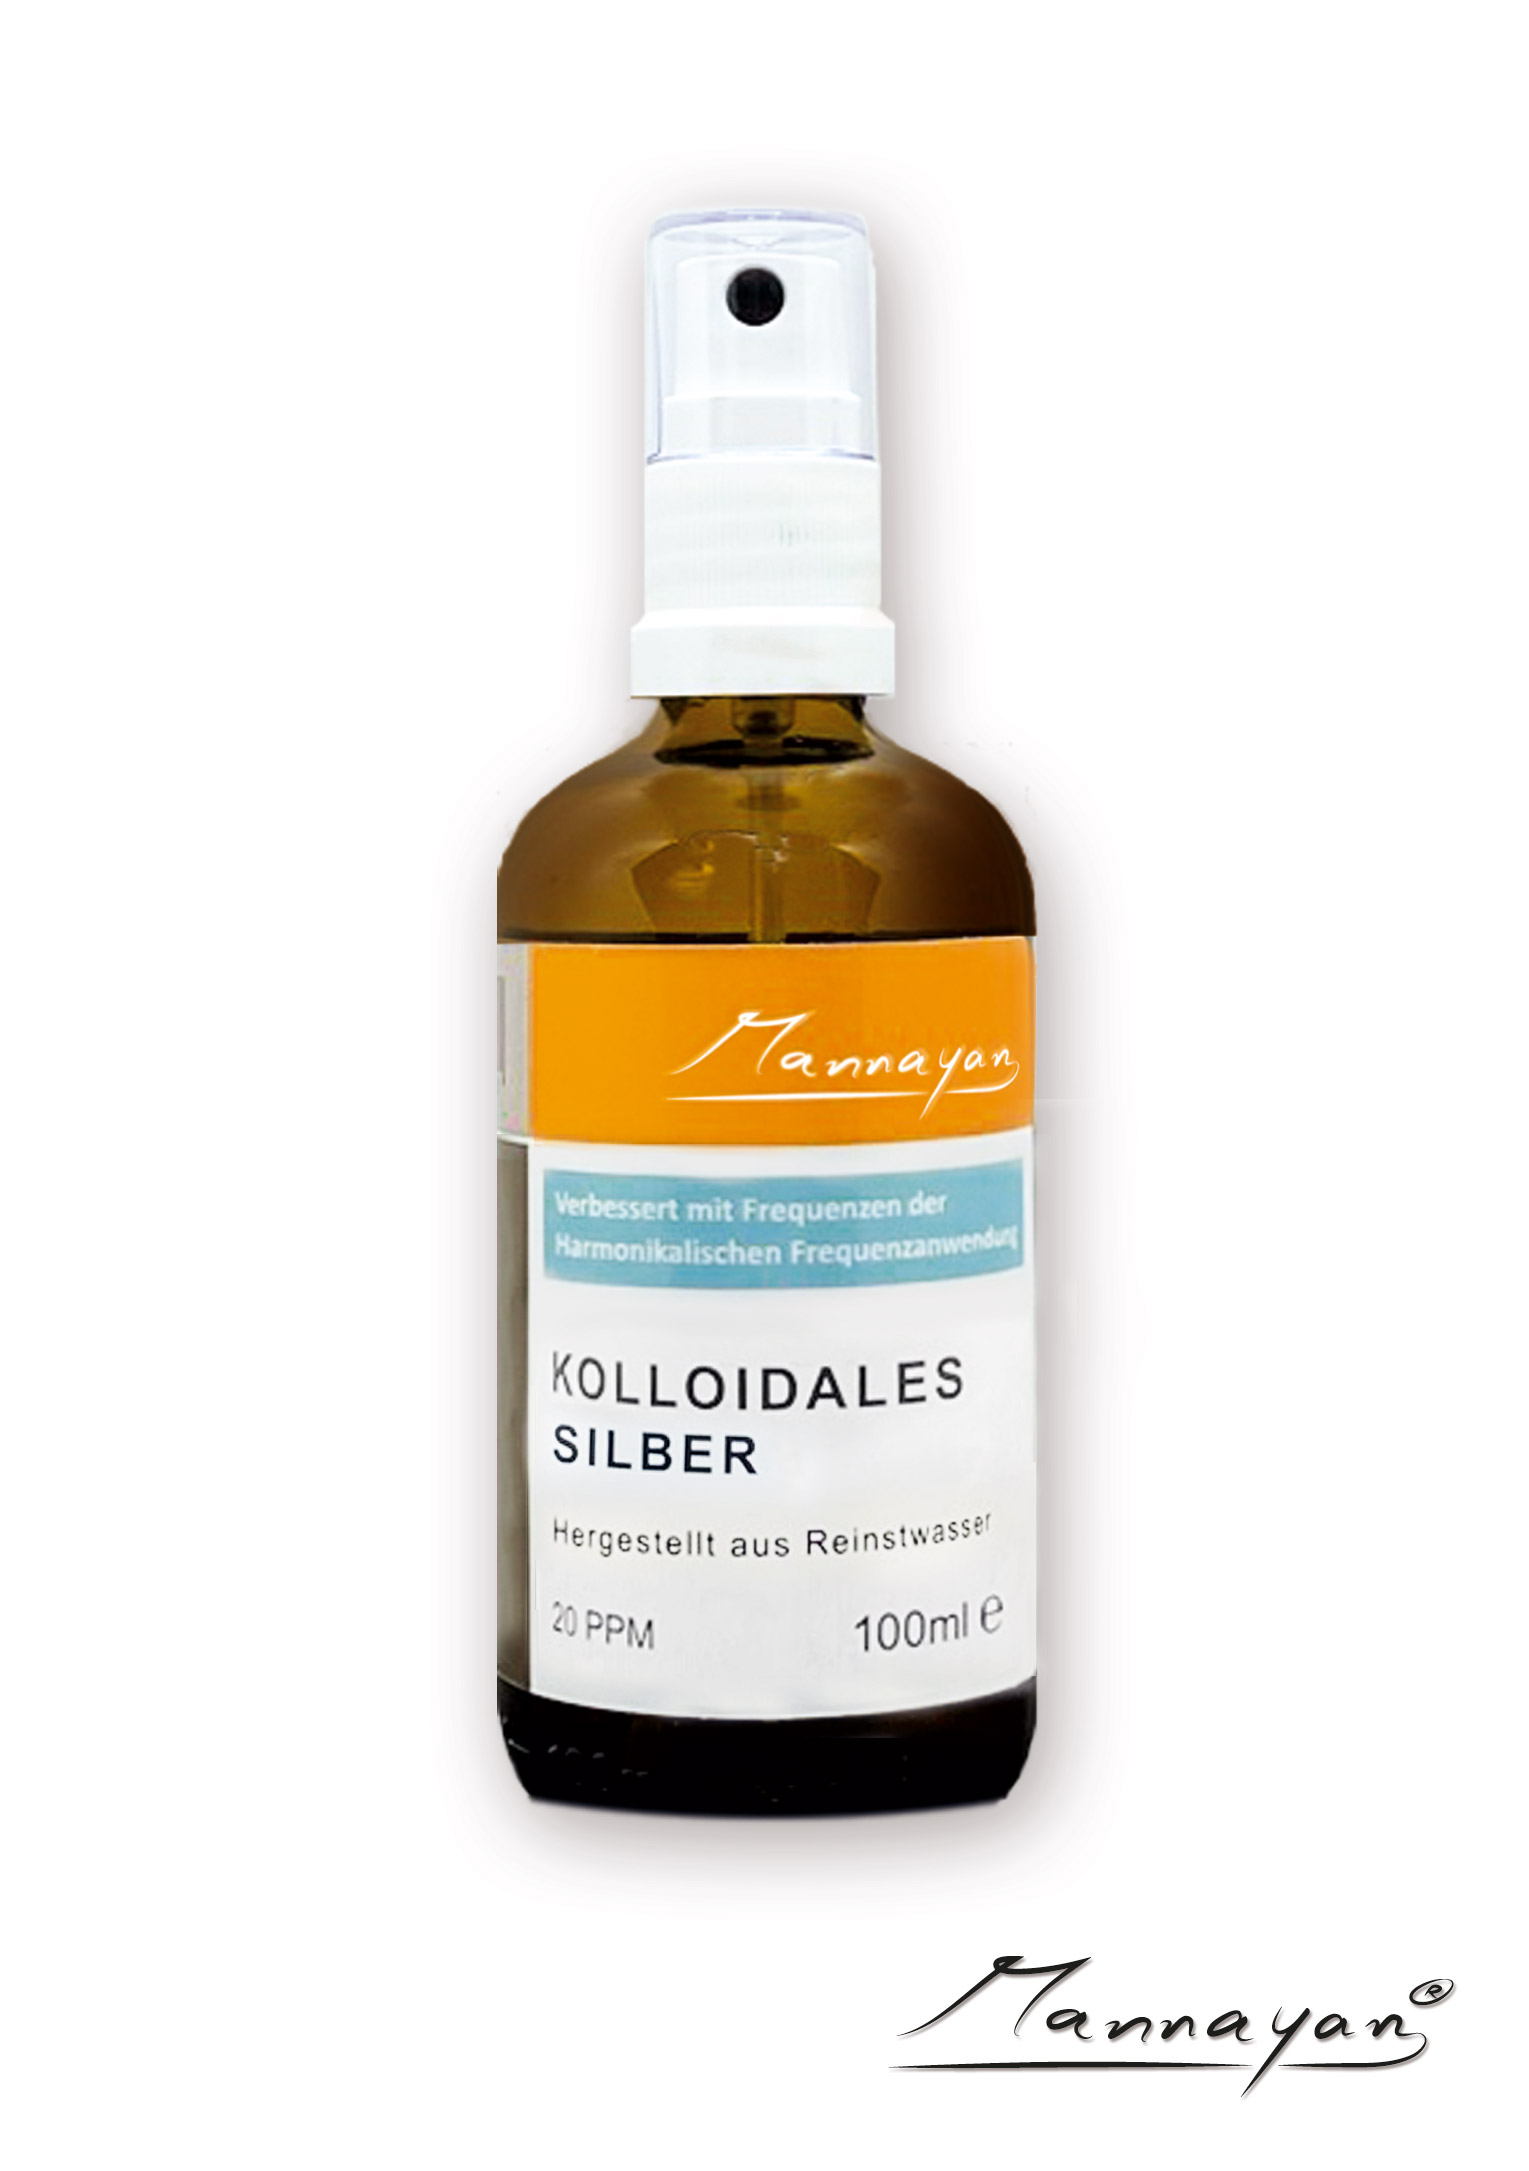 Mannayan Kolloidales Silber 100 ml